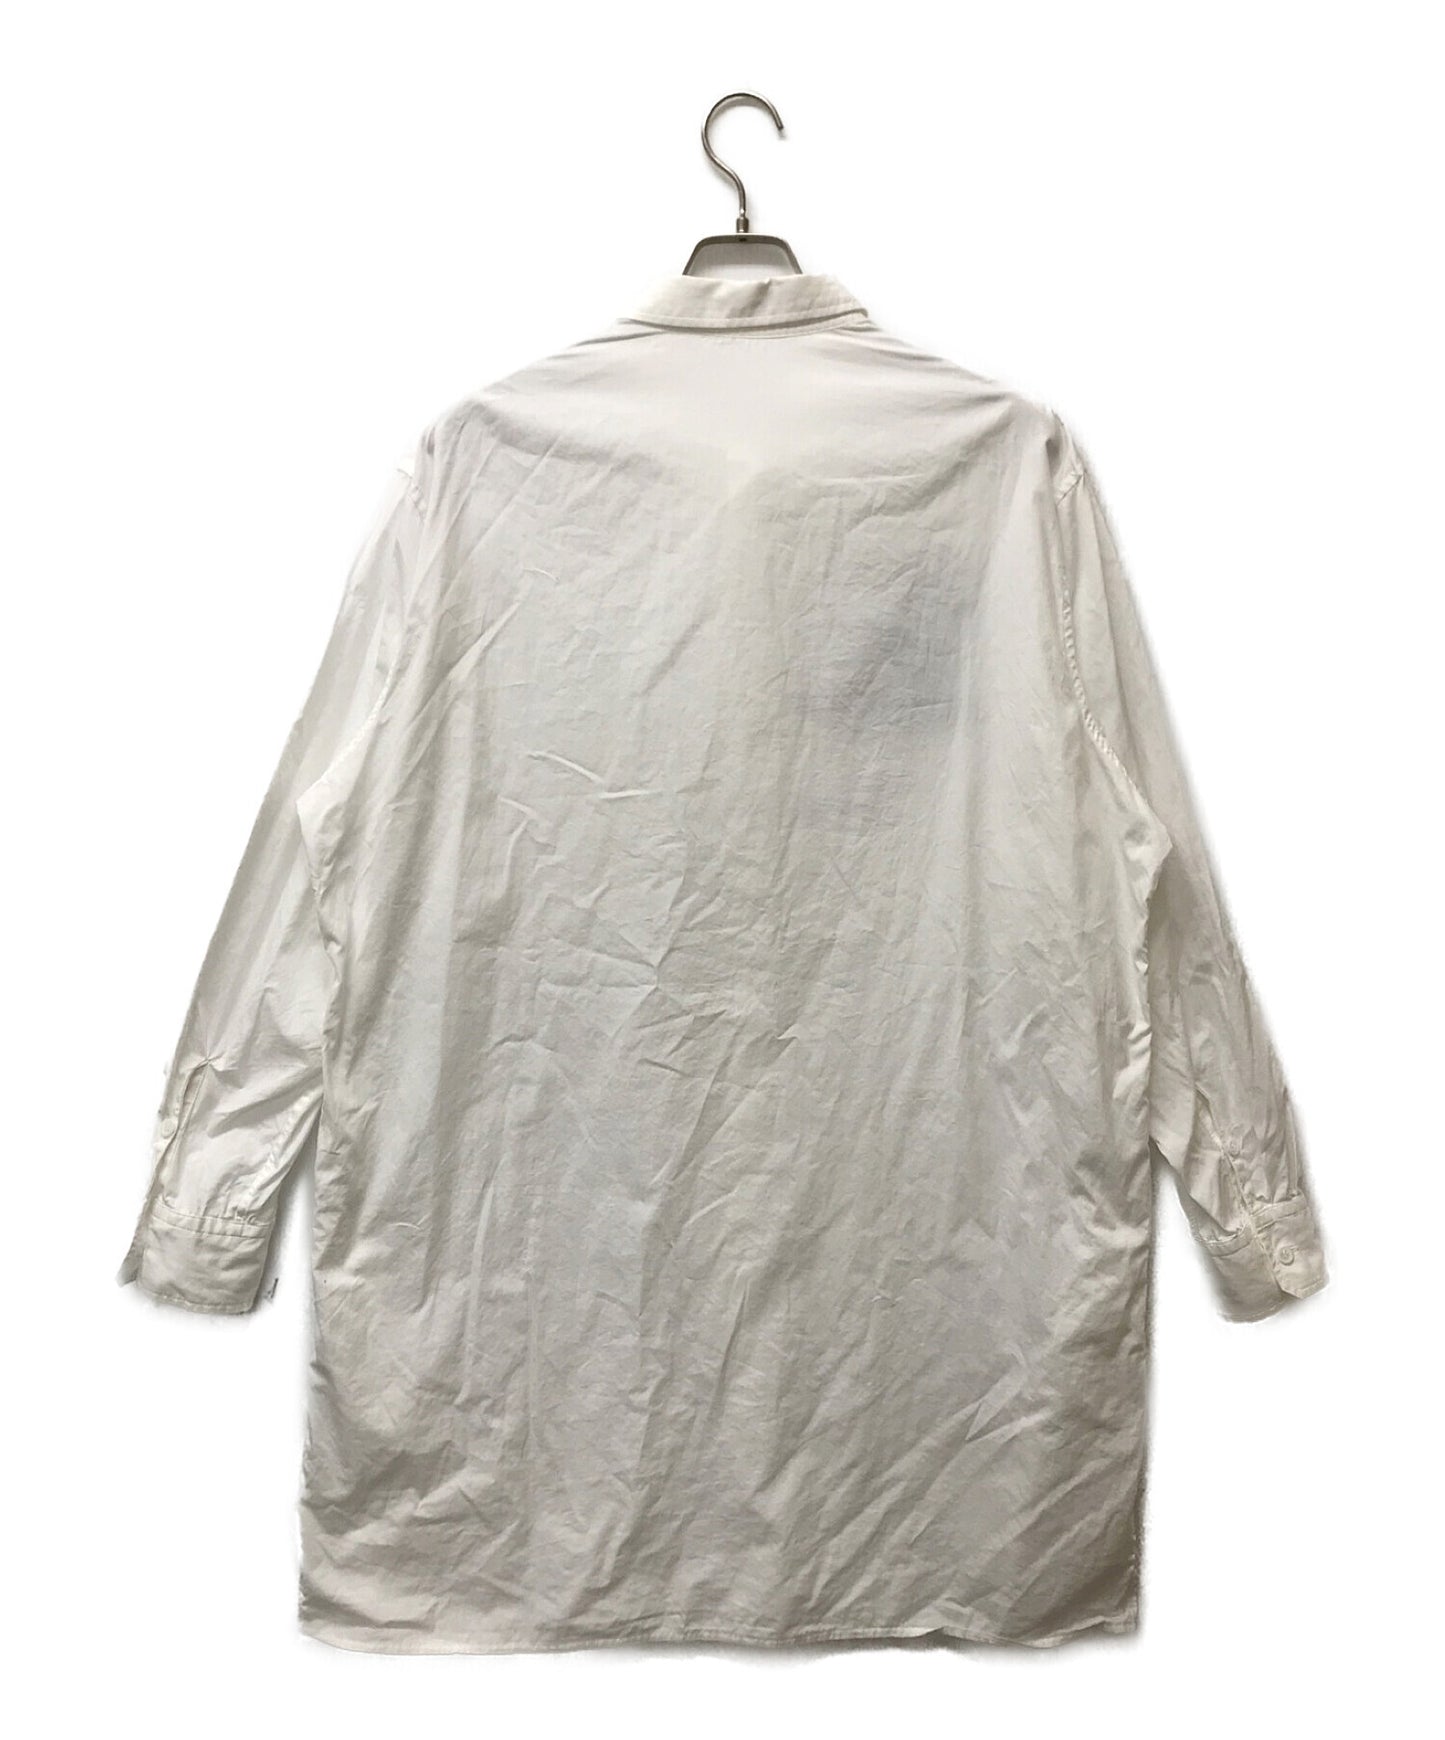 Yohji Yamamoto Pour Homme繪圖打印常規衣領長襯衫HH-B76-035